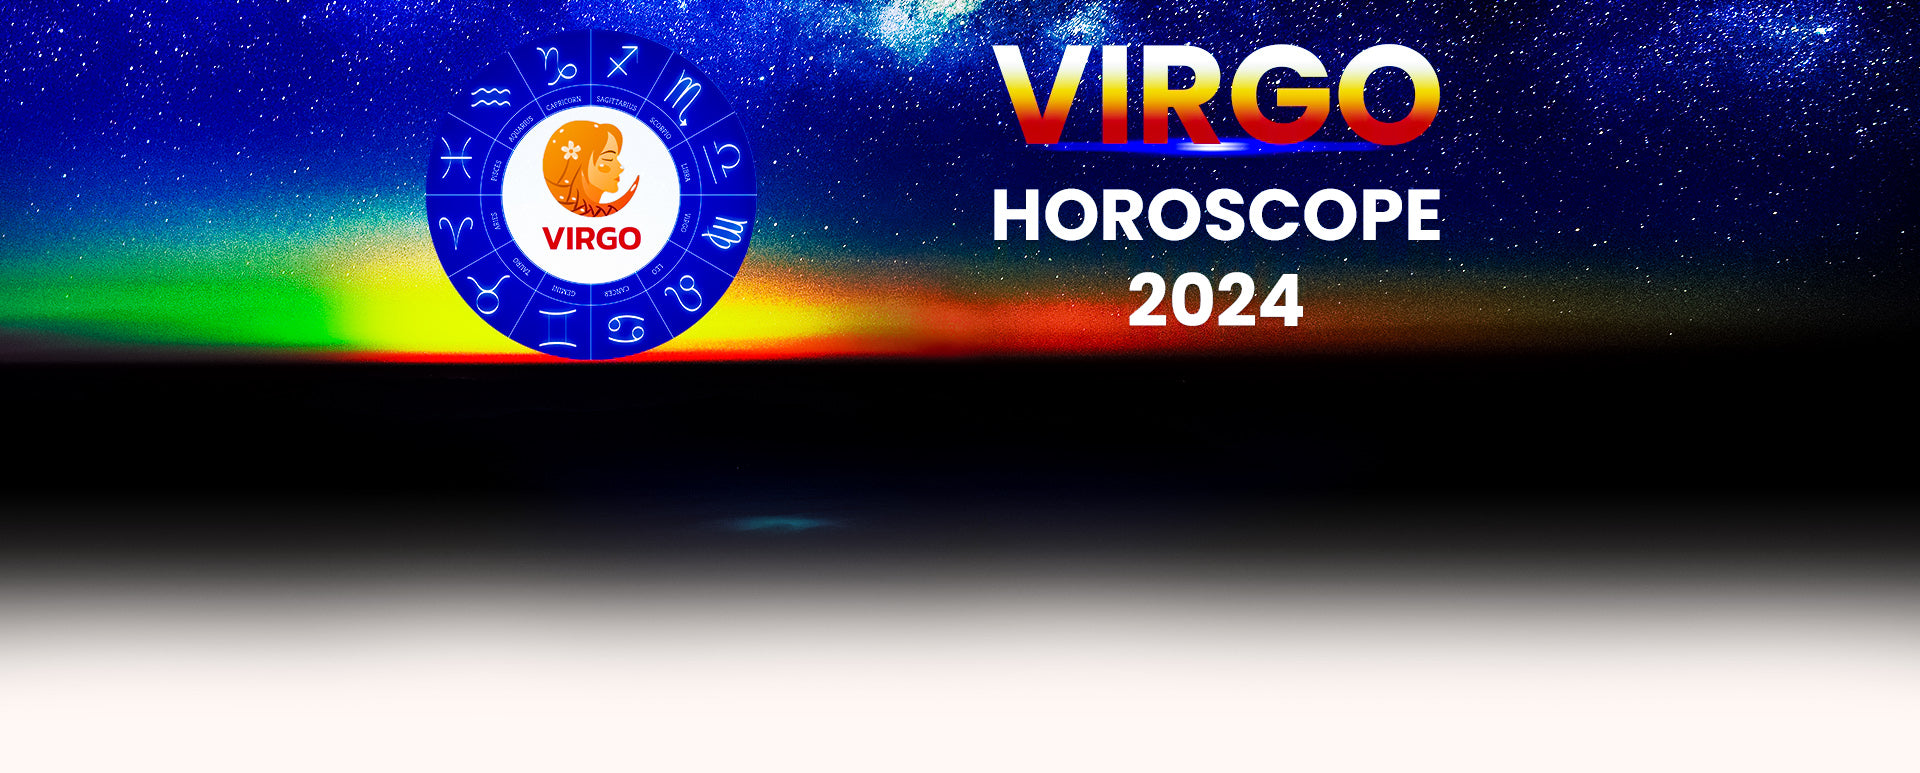 virgo 2024 horoscope in urdu